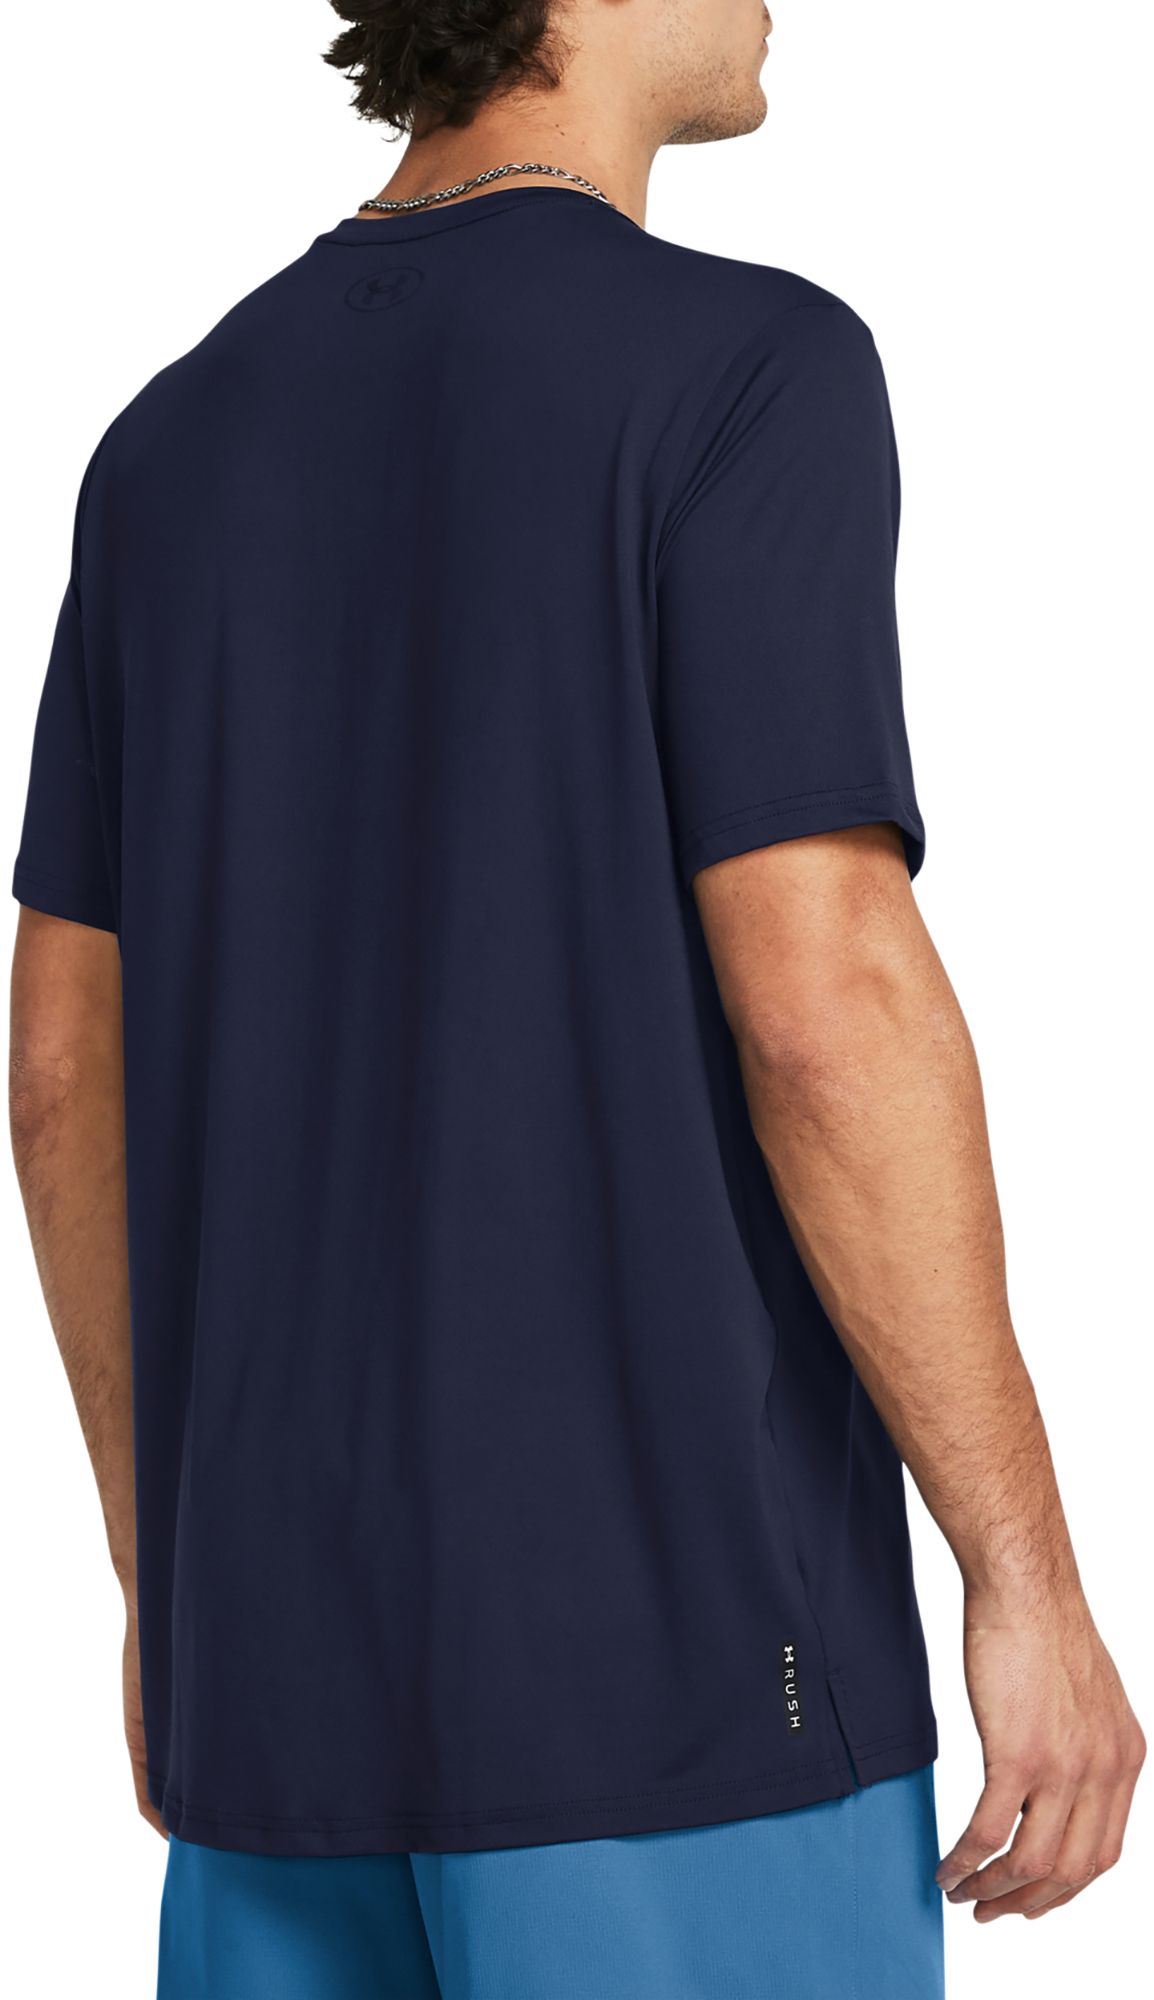 Dick's Sporting Goods Under Armour Men's Vanish Energy Short Sleeve T-Shirt